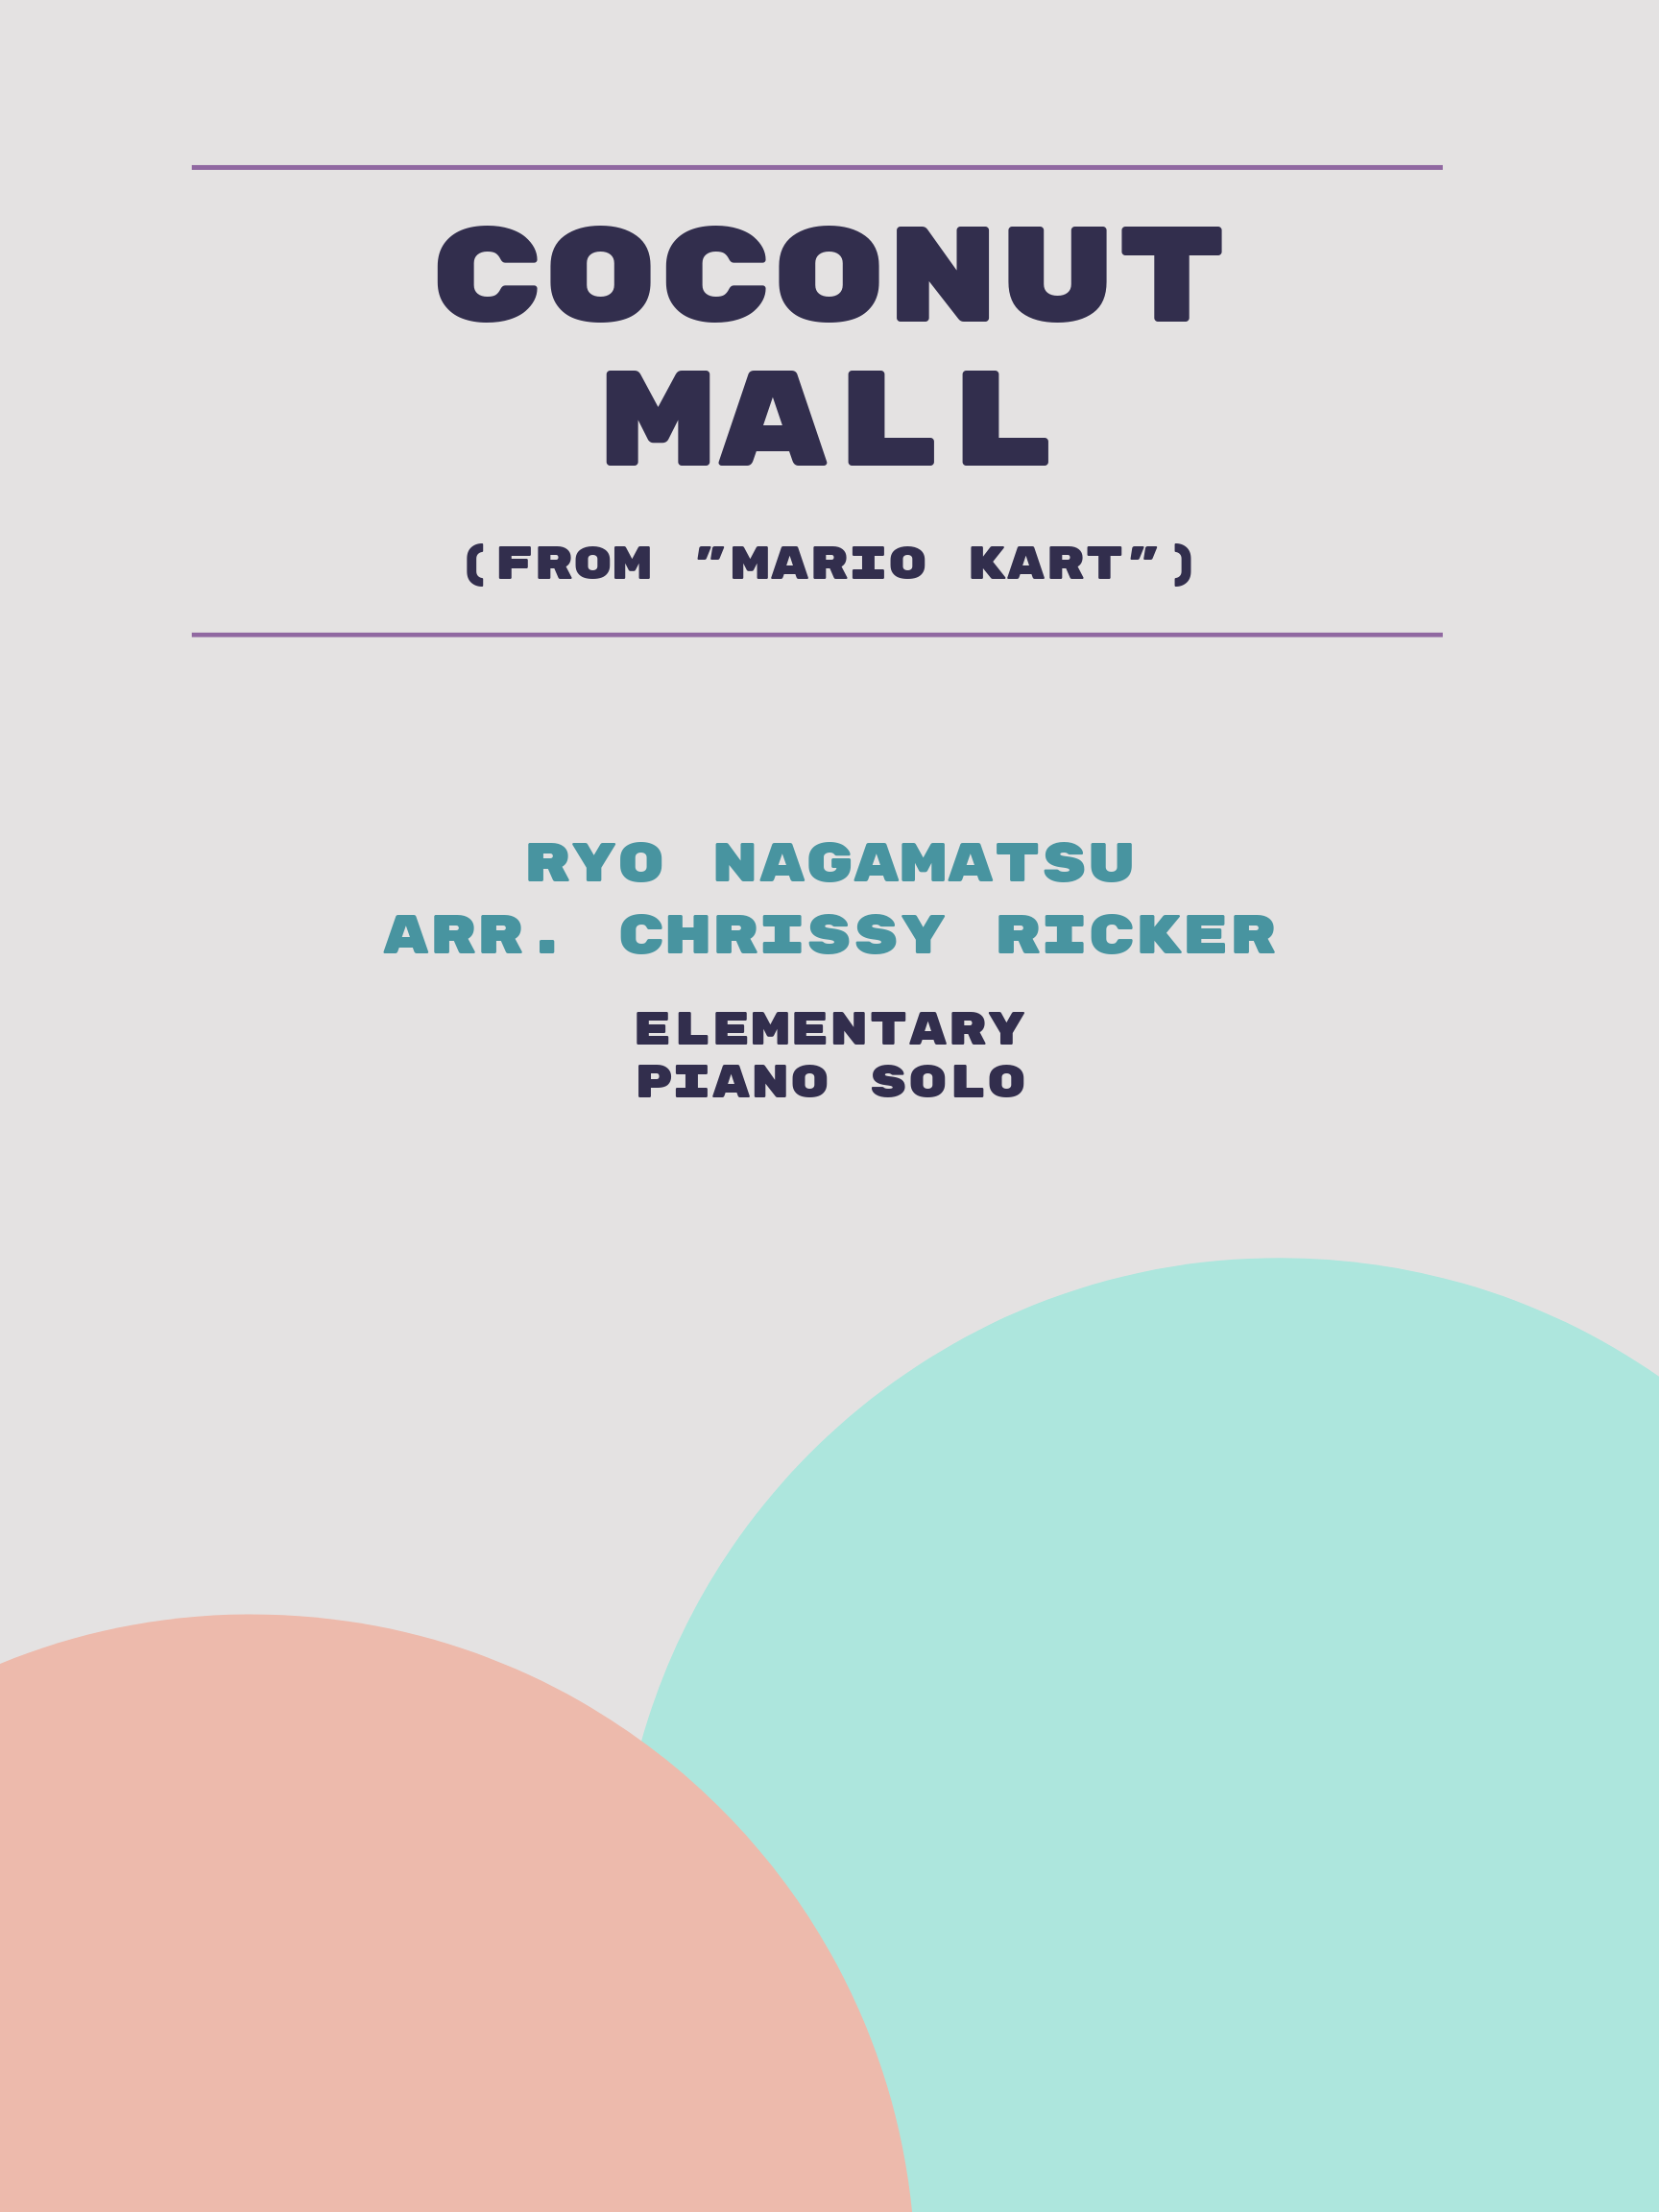 Coconut Mall by Ryo Nagamatsu